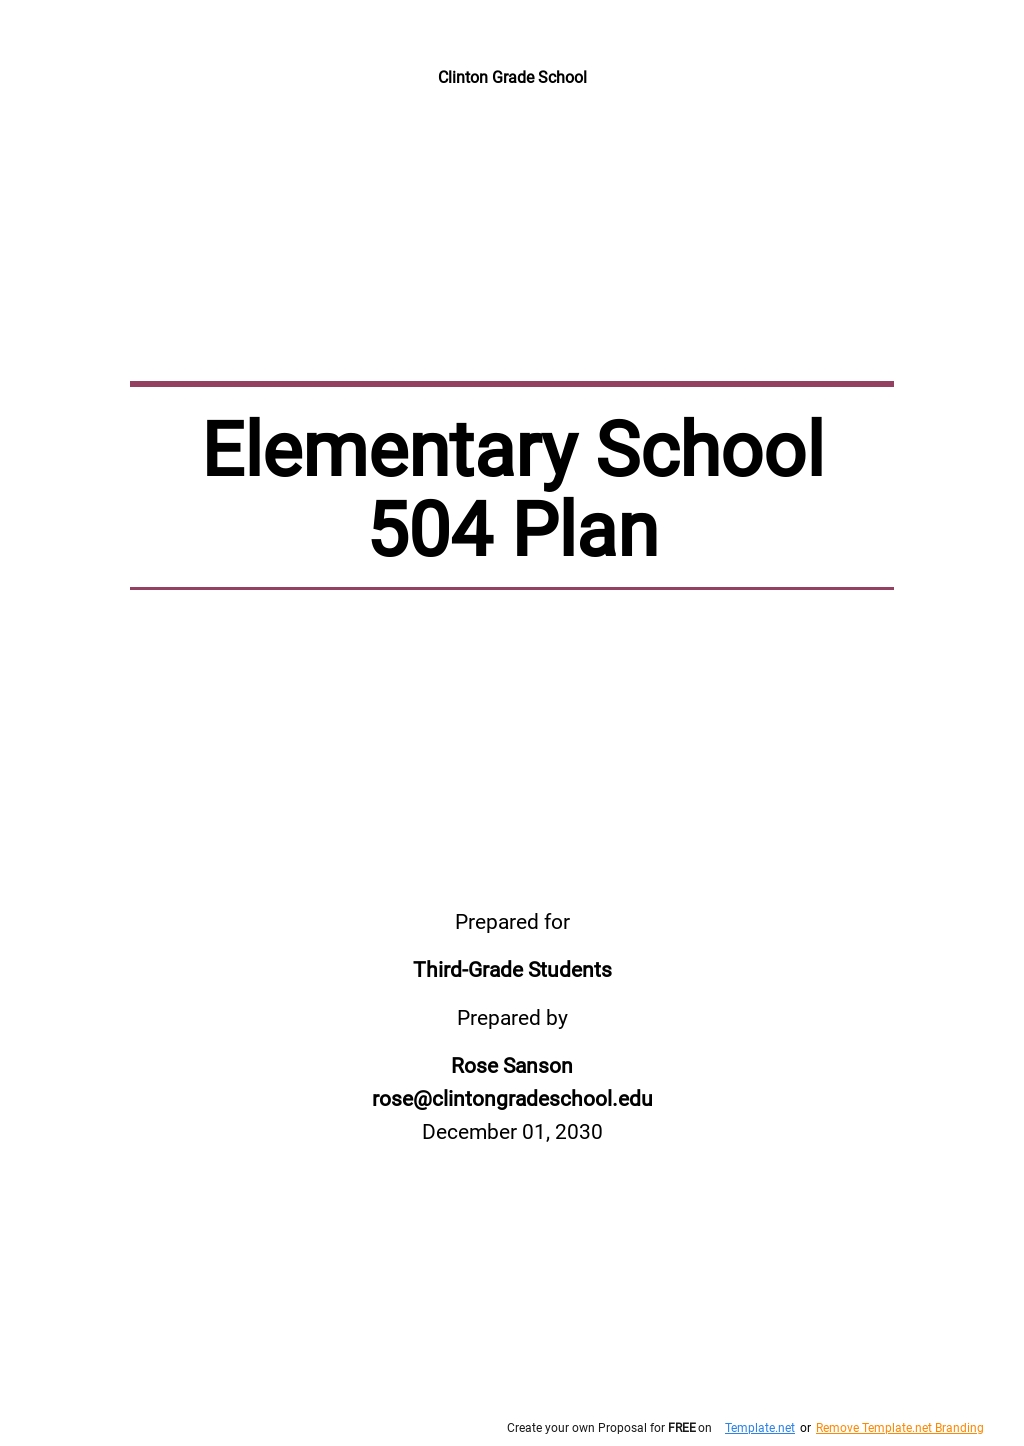 Elementary School 504 Plan Template